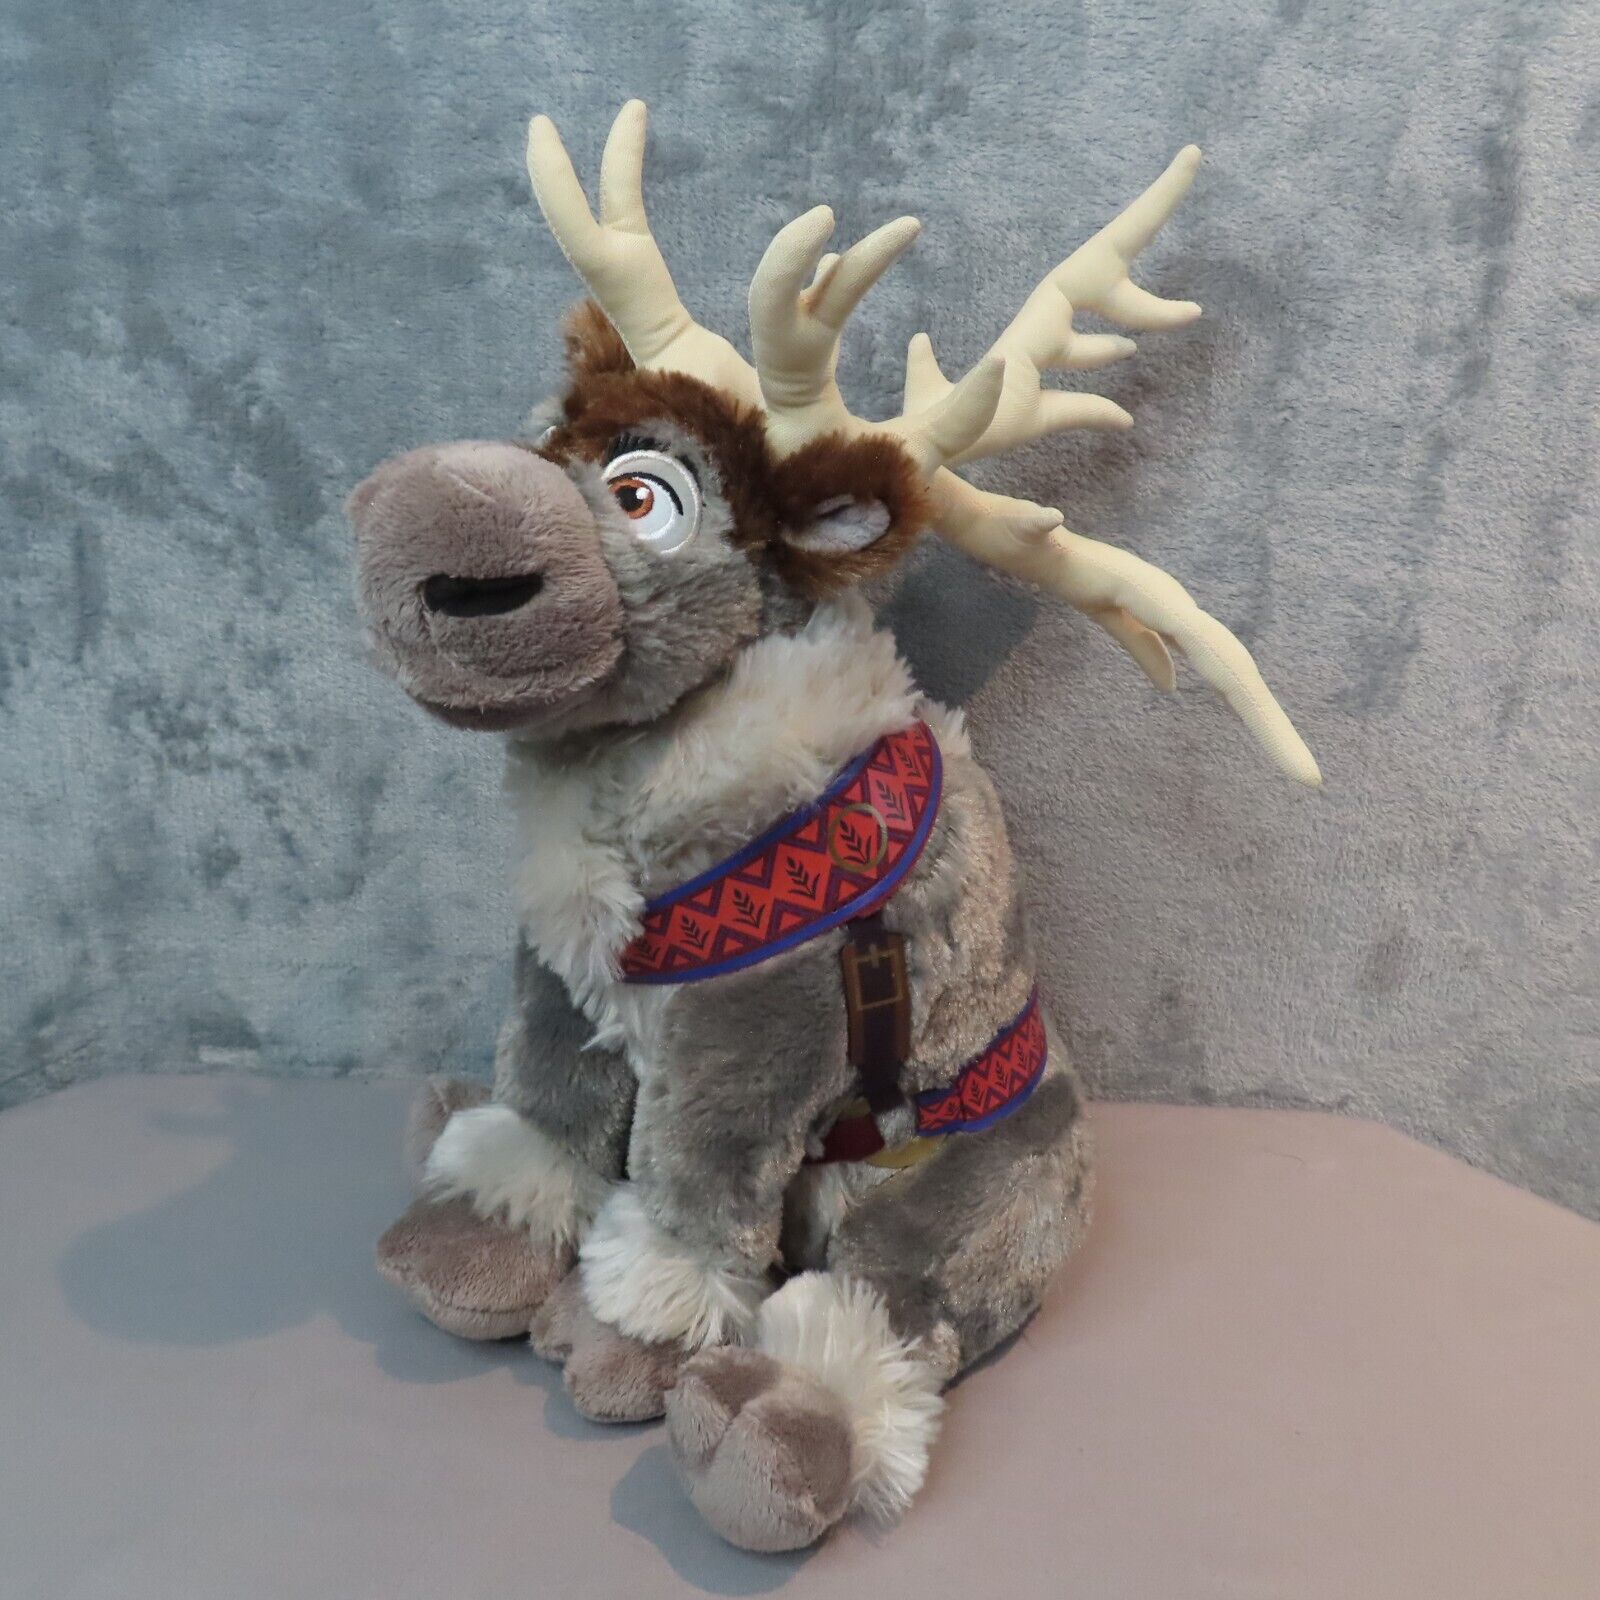 DISNEY Parks Store Exclusive SVEN Plush Frozen 2 II Stuffed Animal Toy Sitting